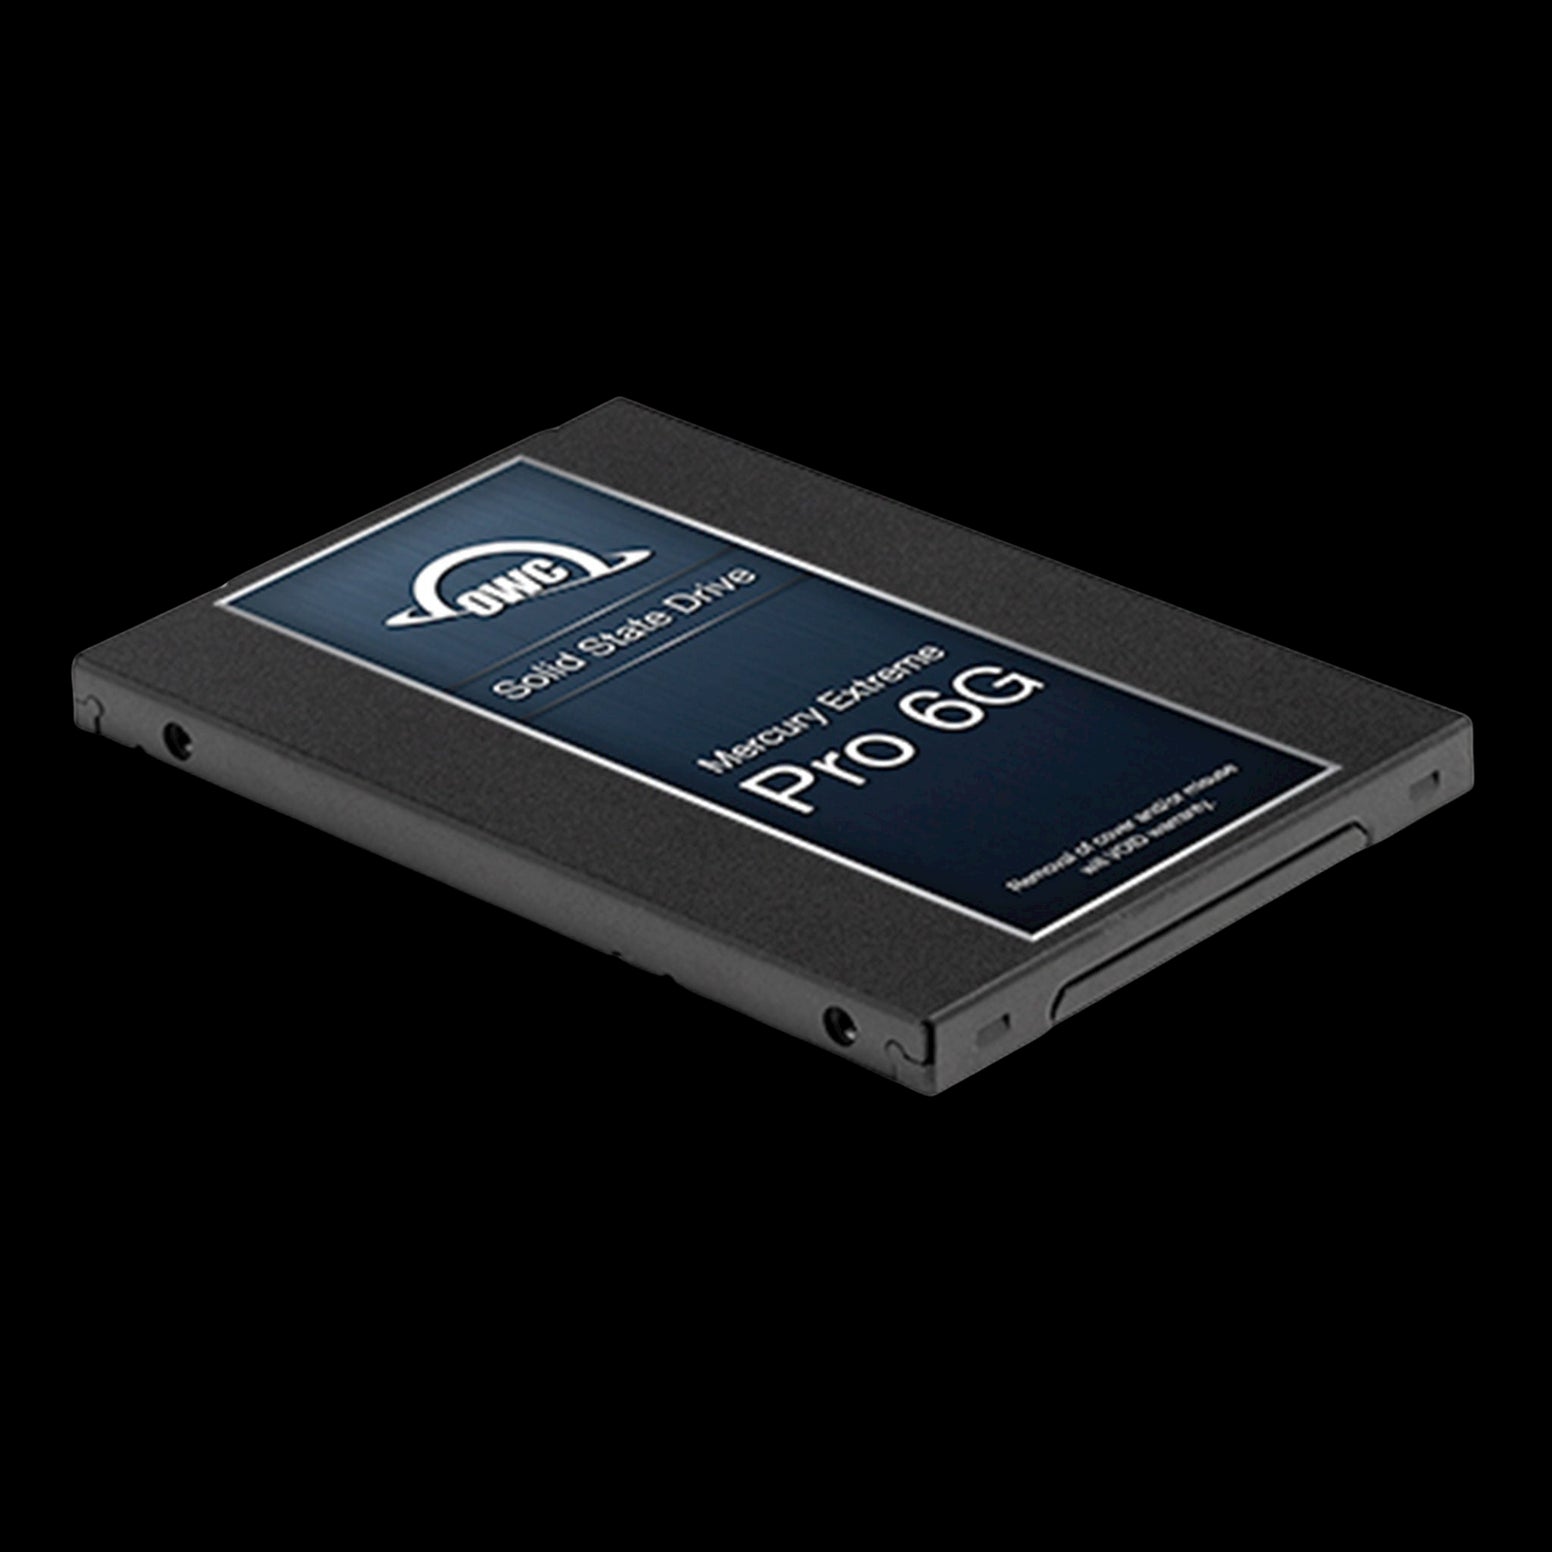 OWC 480GB Mercury Extreme Pro 6G 2.5" SATA SSD